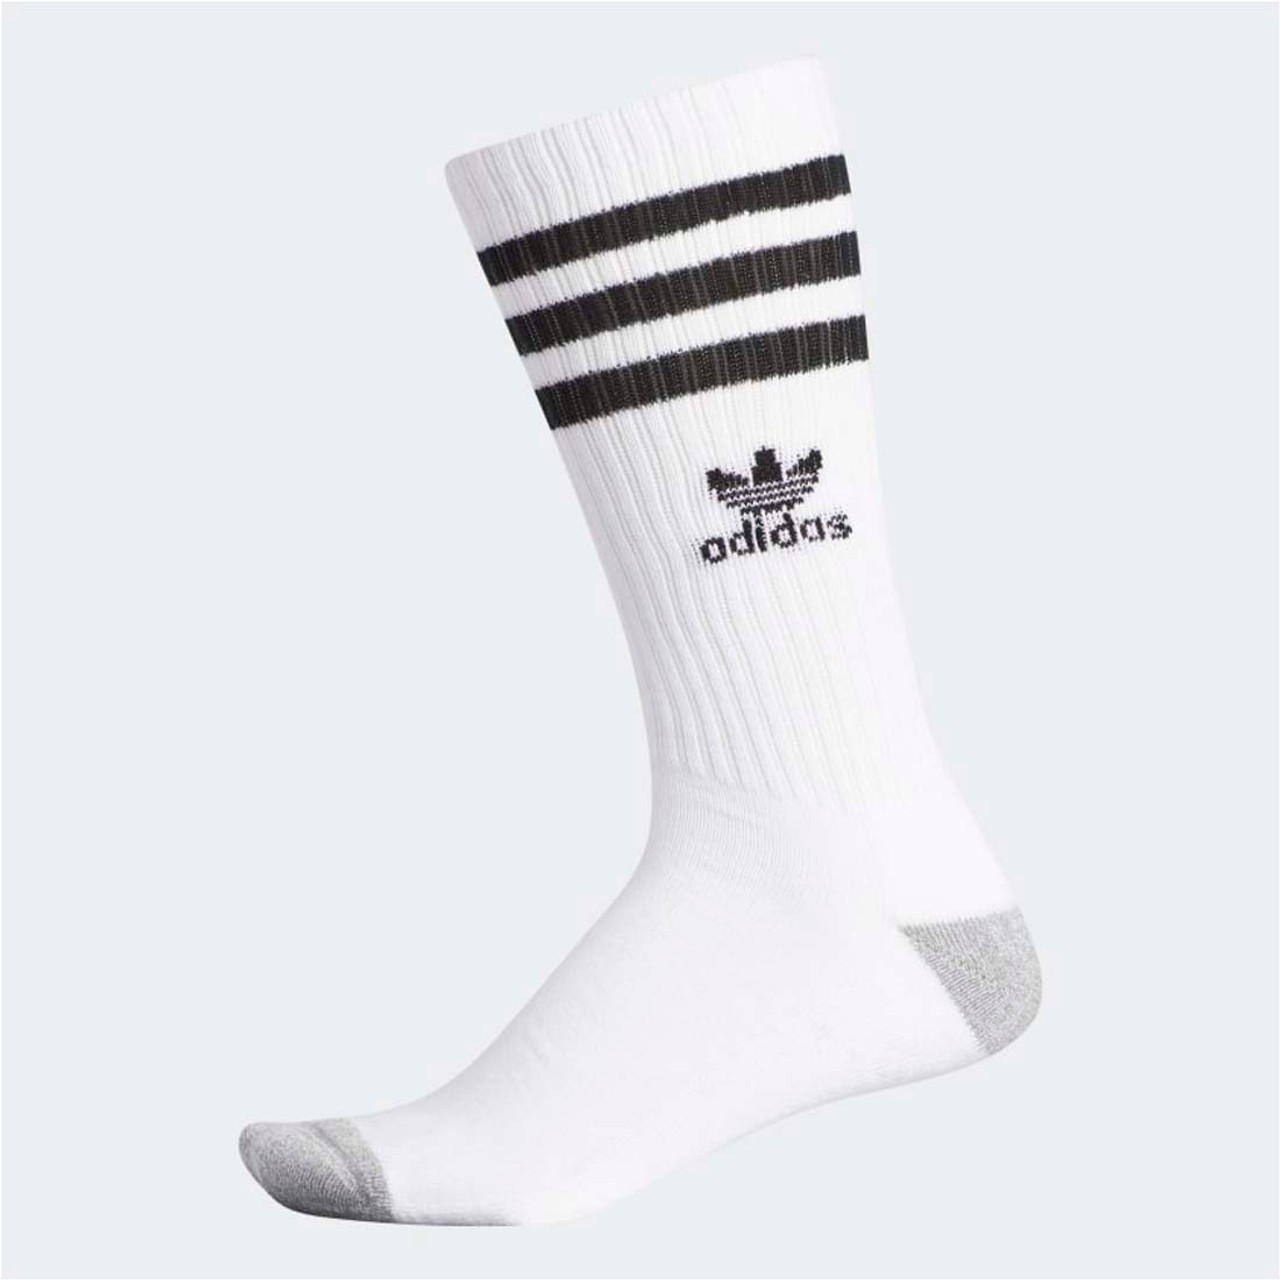 adidas men's black crew socks